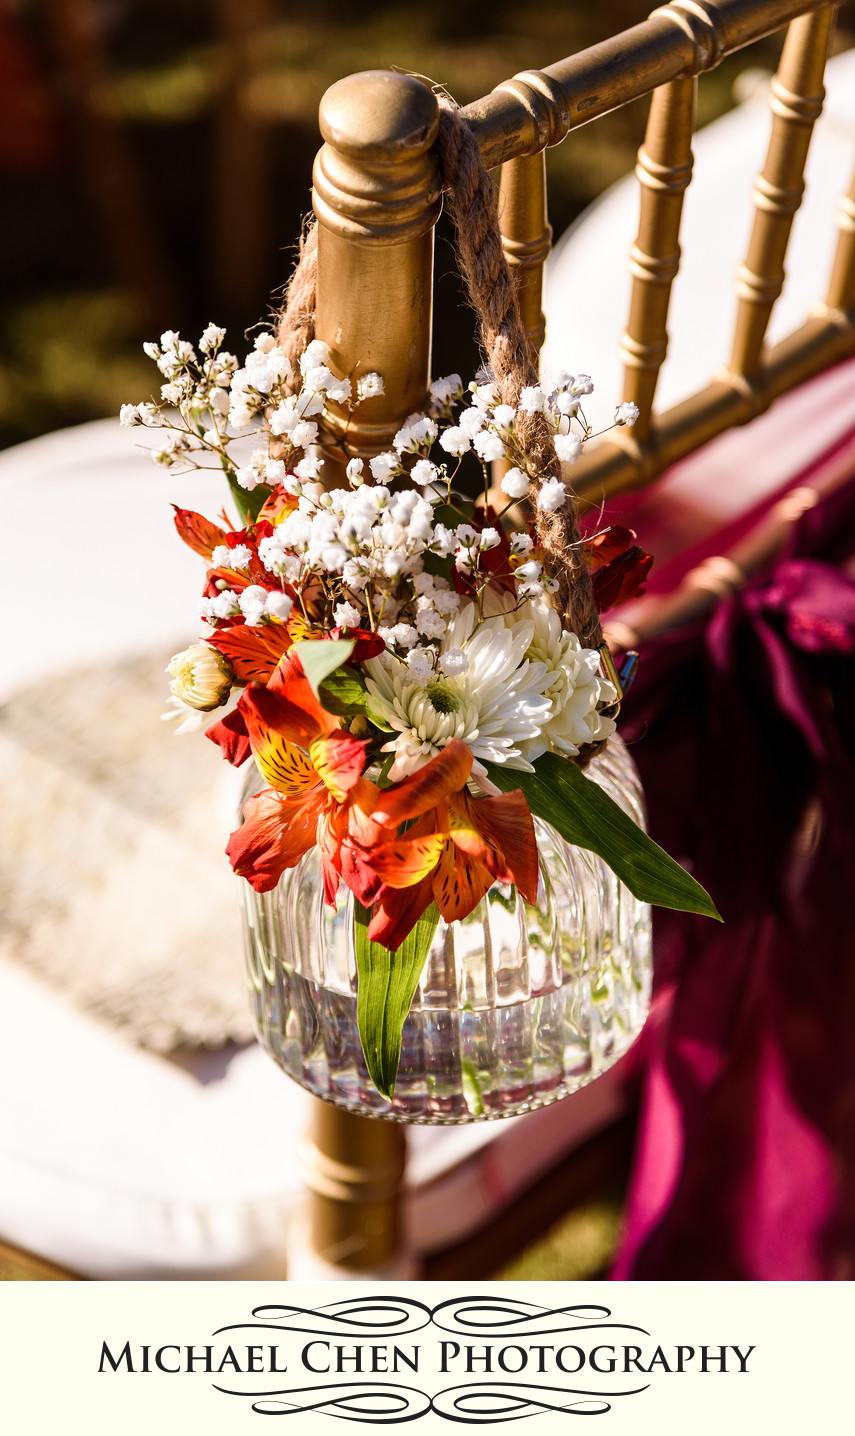 floral decoration for wedding